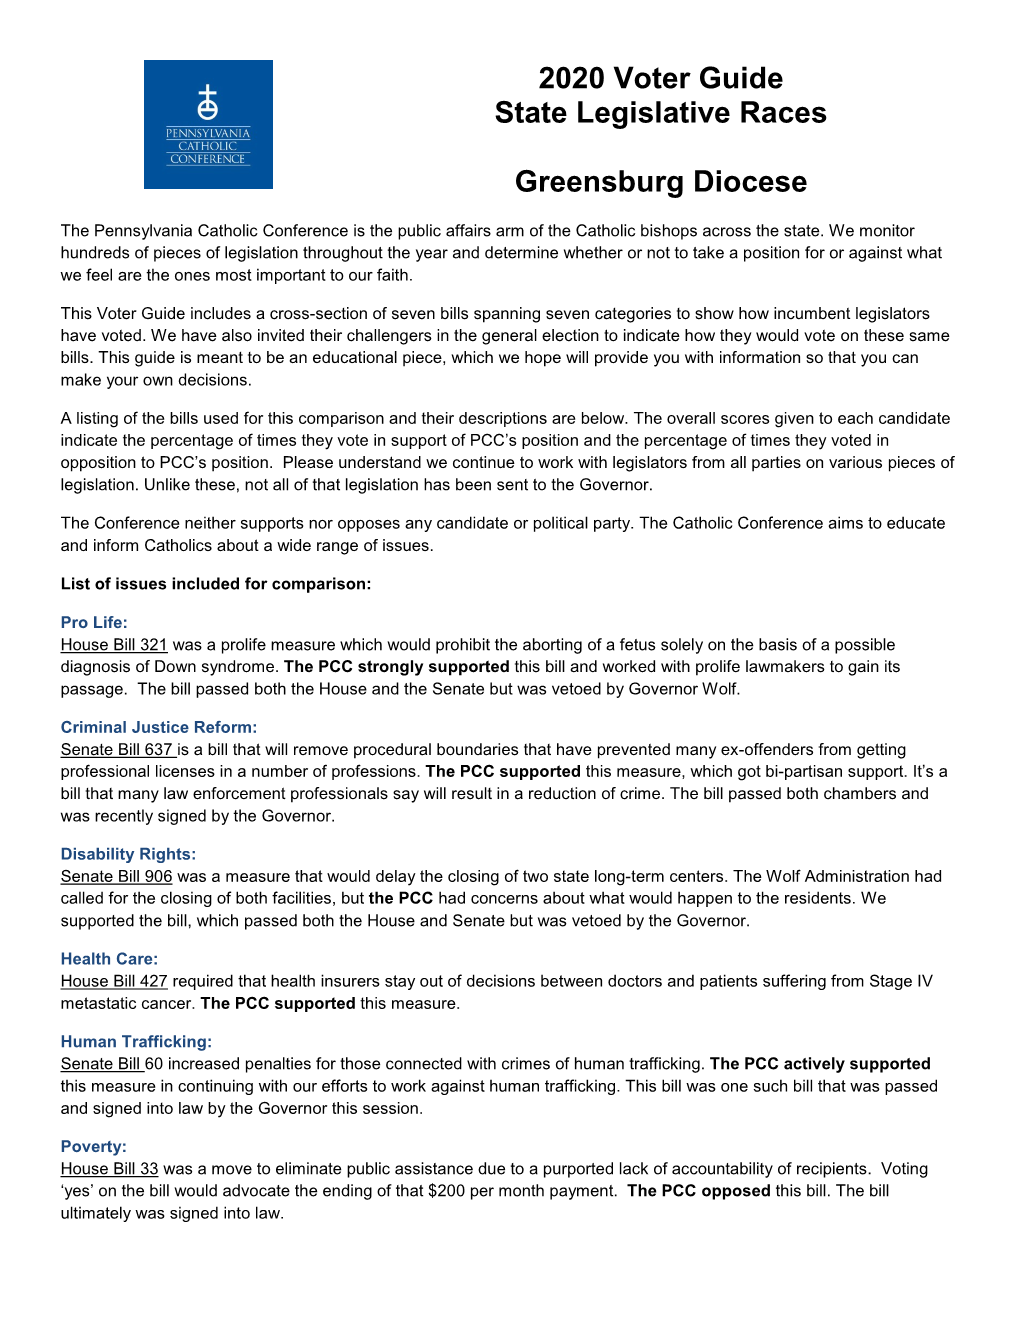 2020 Voter Guide State Legislative Races Greensburg Diocese